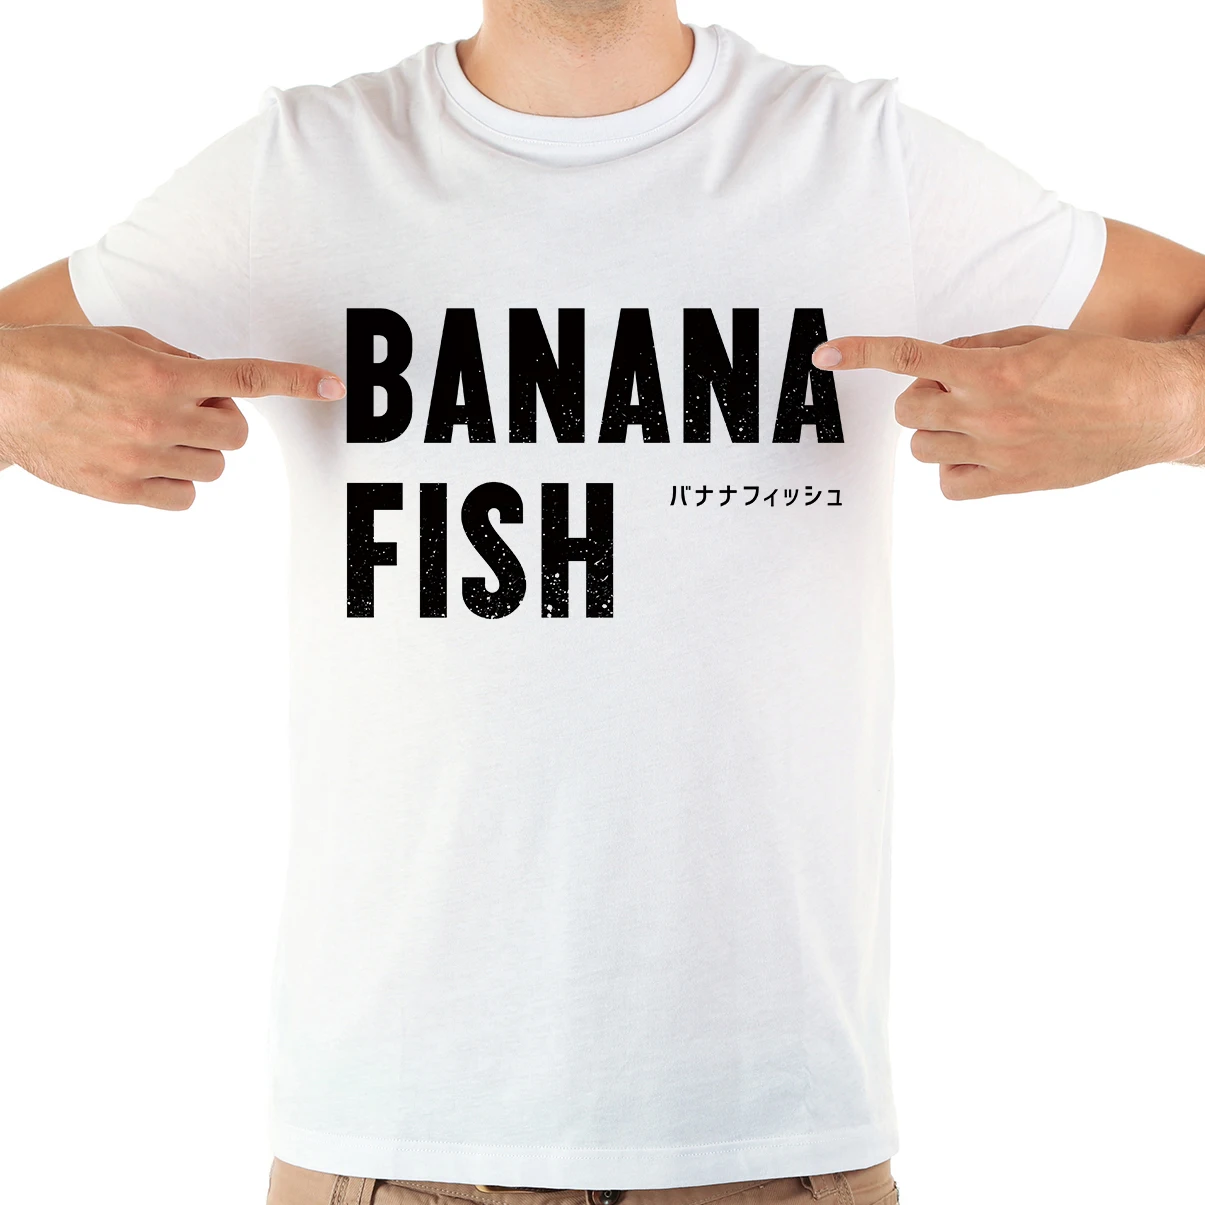 Japan anime banana fish funny t shirt men 2019 summer new white casual short sleeve homme cool tshirt | Мужская одежда